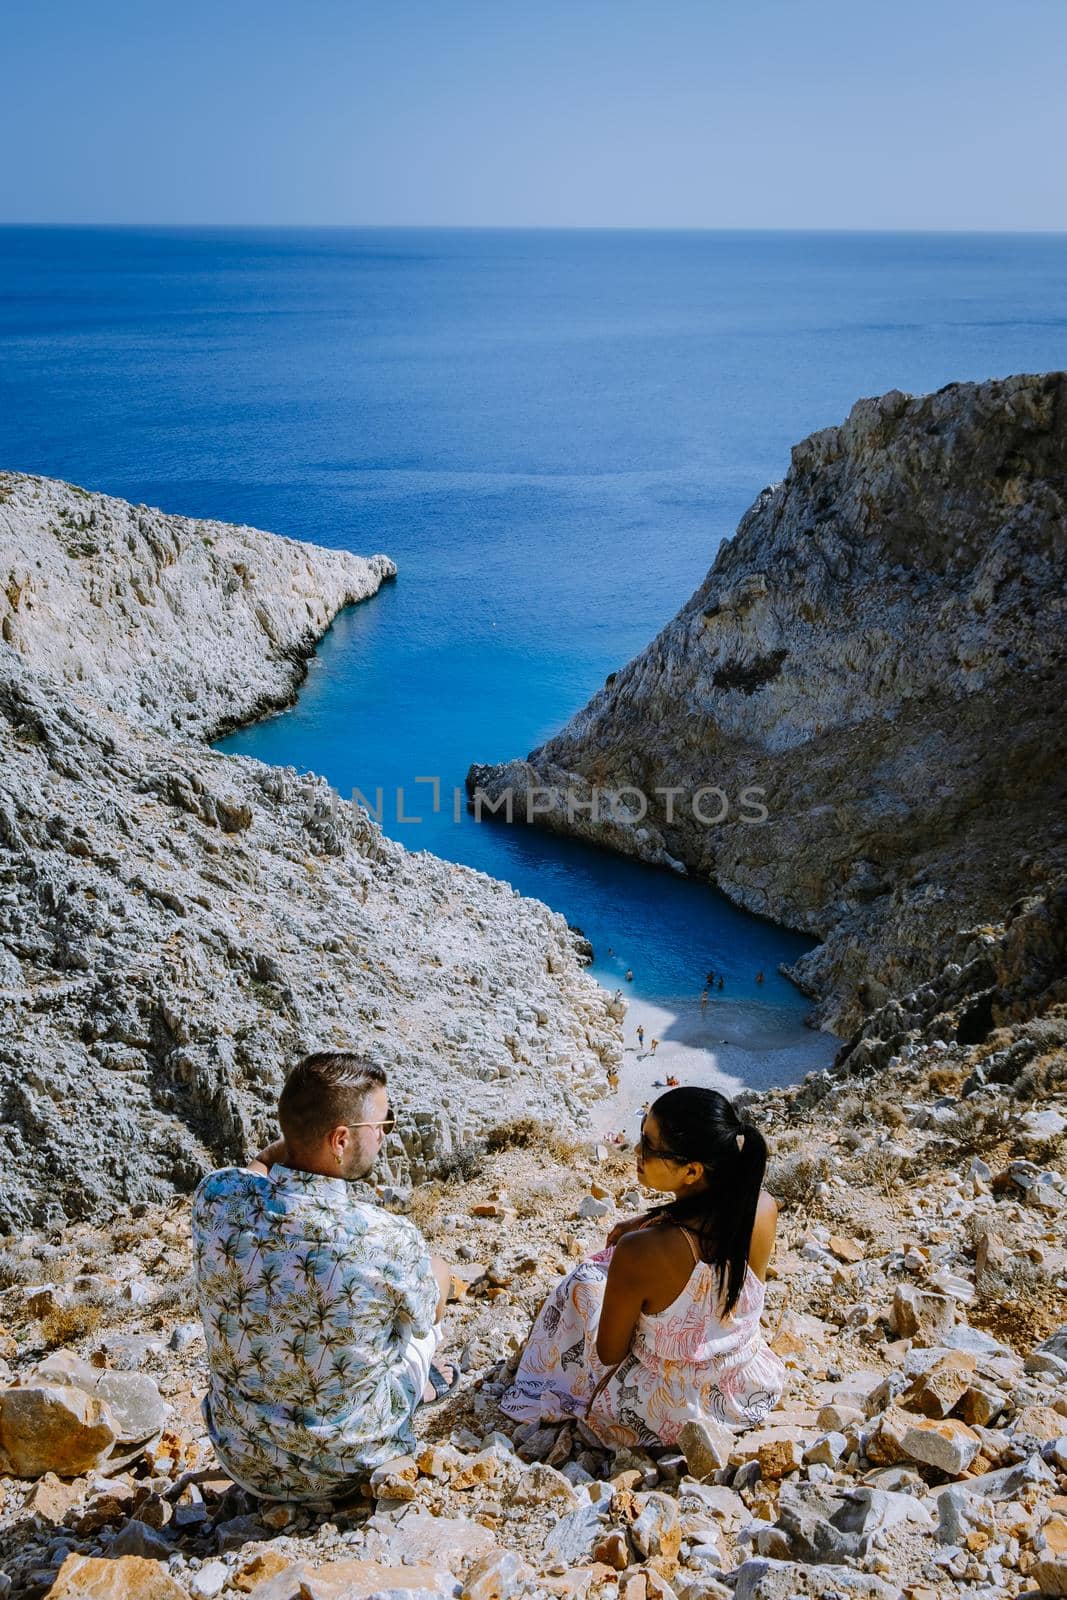 Beautiful beach called Seitan limania on Crete, Greece by fokkebok